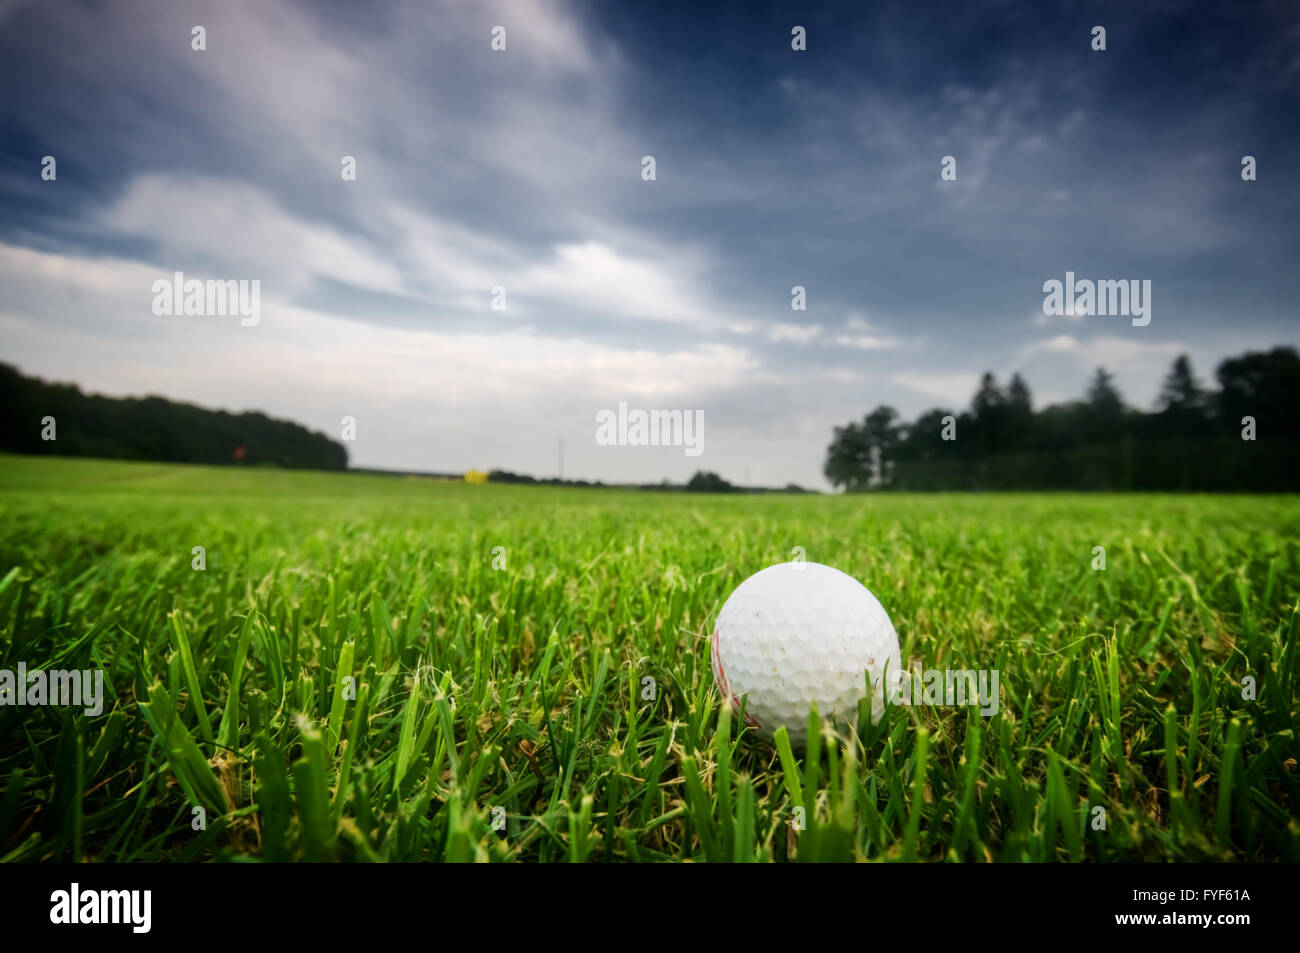 Golf ball on the field. Green grass Stock Photo